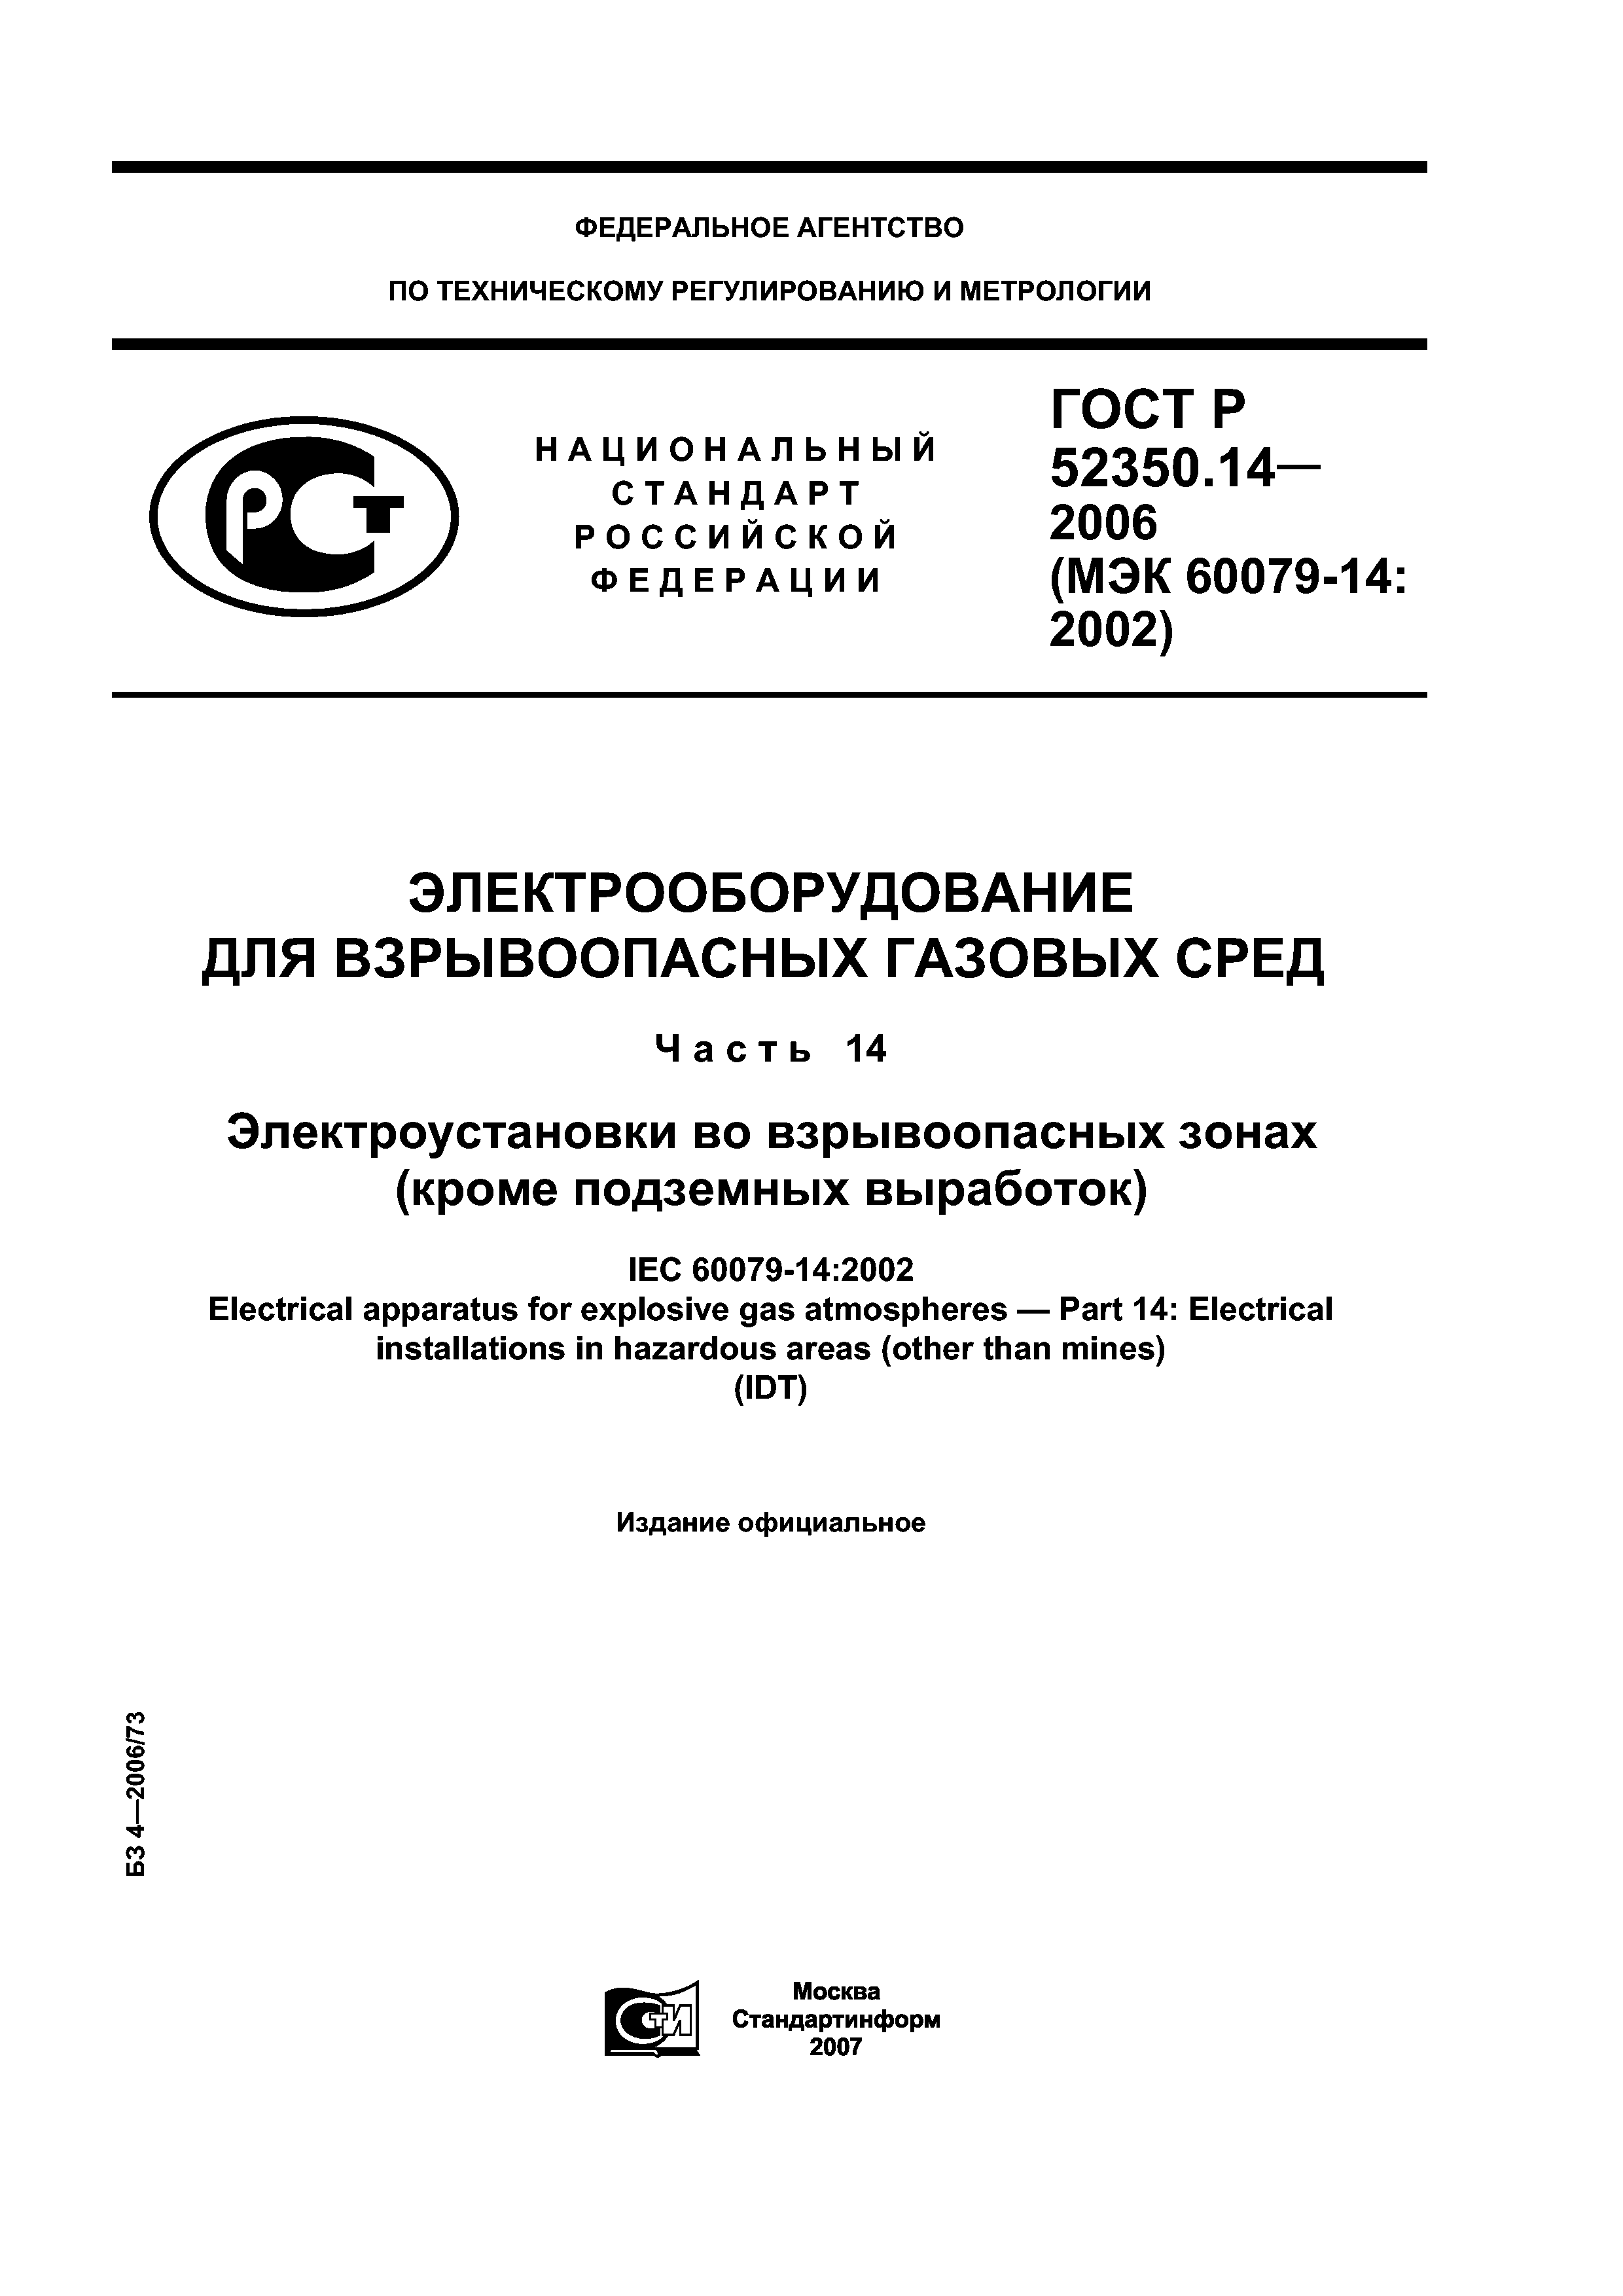 ГОСТ Р 52350.14-2006